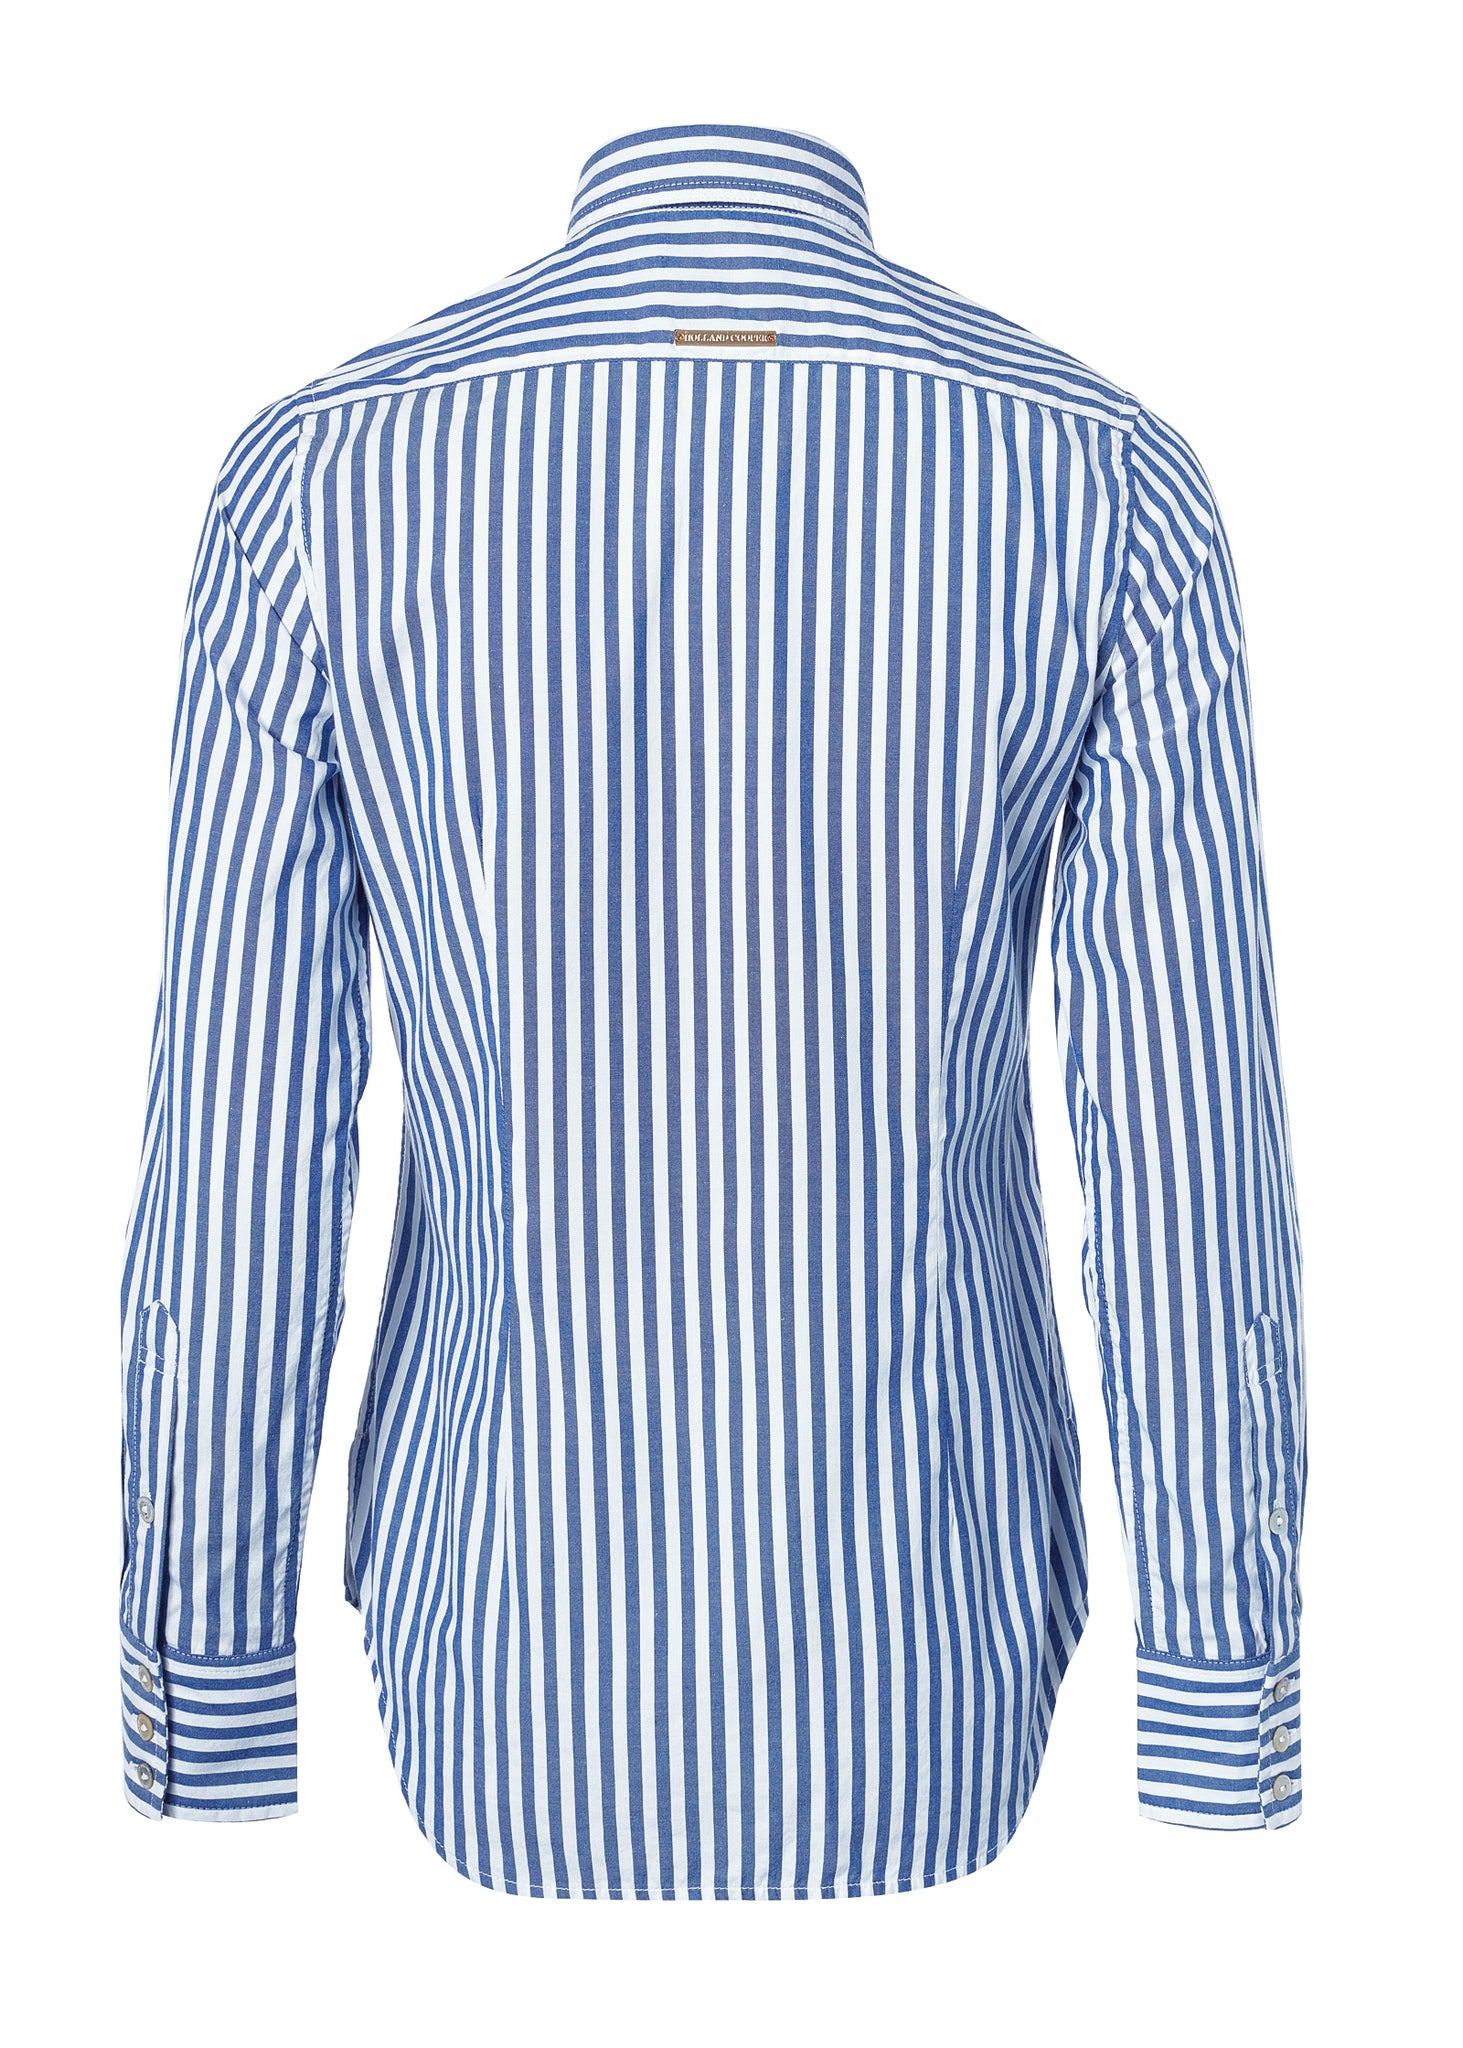 Classic Button Down Shirt (Navy Stripe)